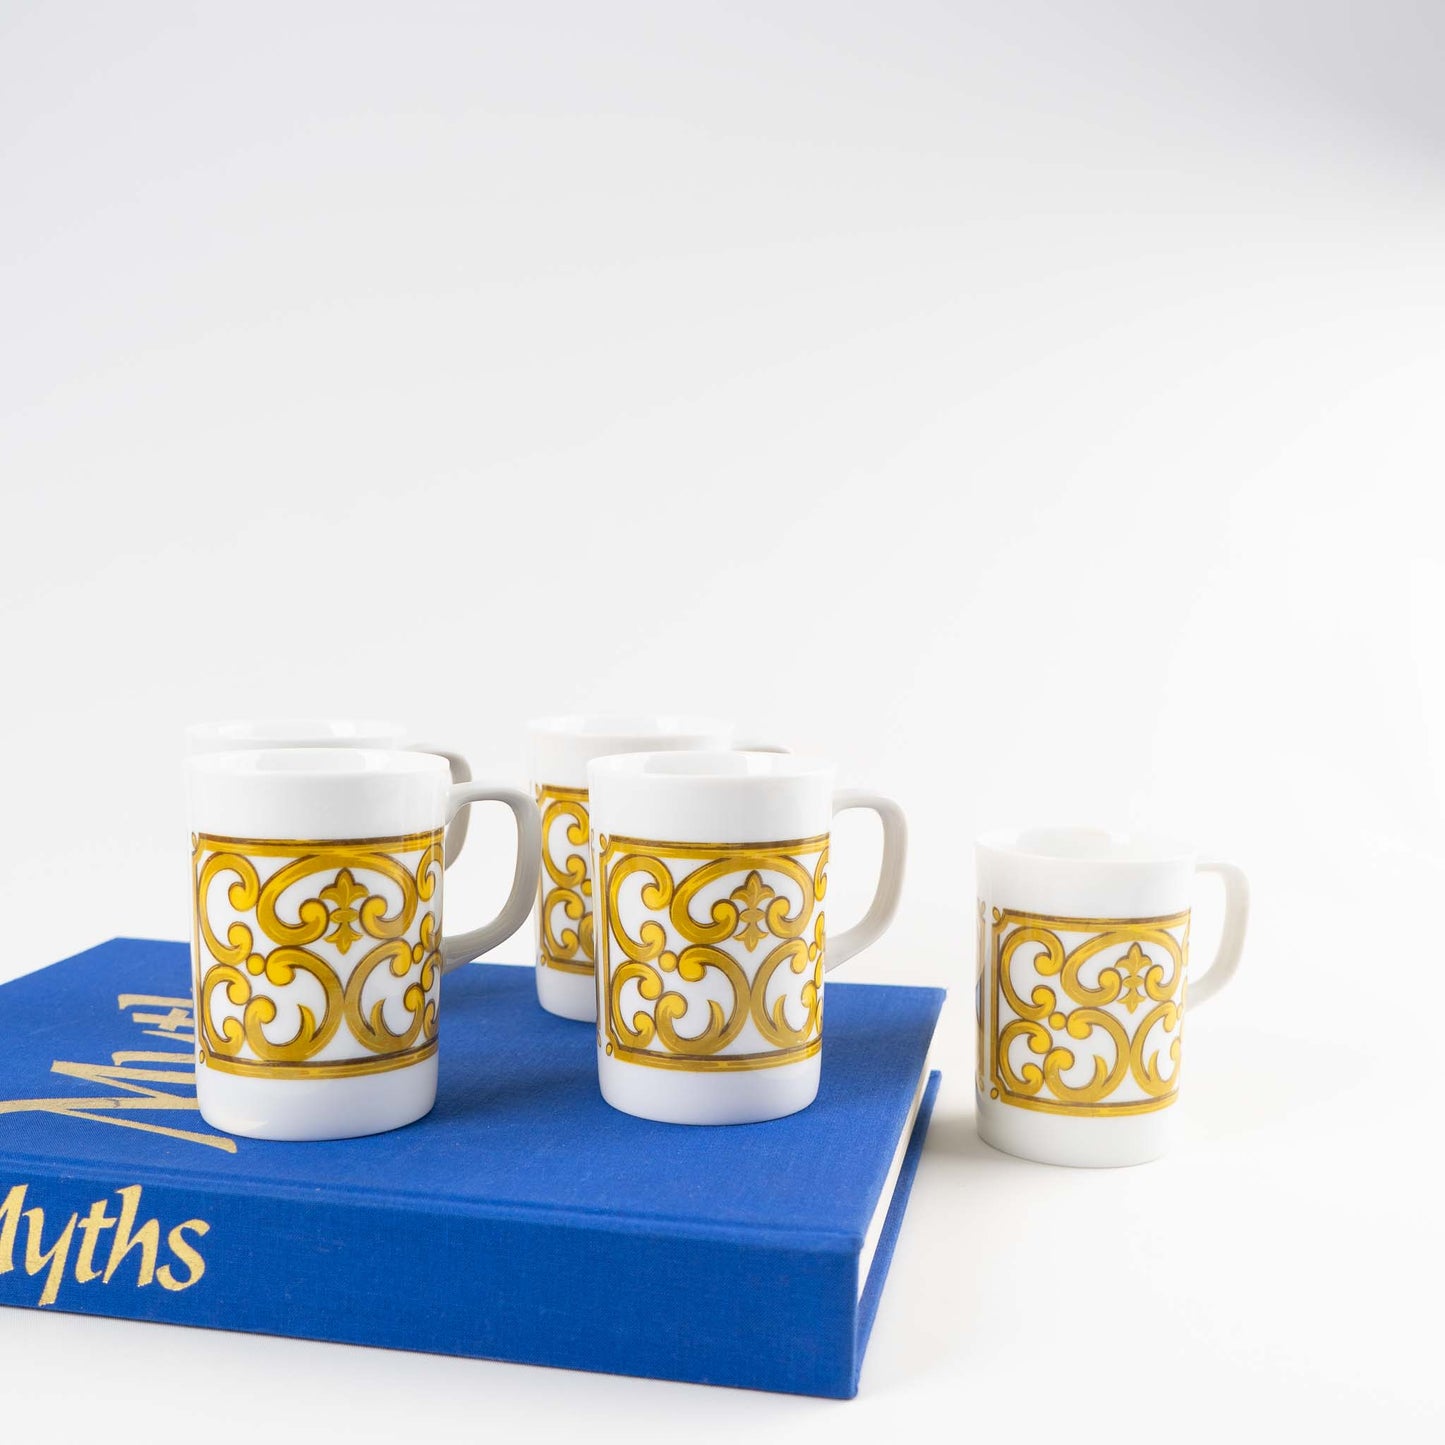 Vintage Georges Briard Coffee Mug Set - 5 pieces